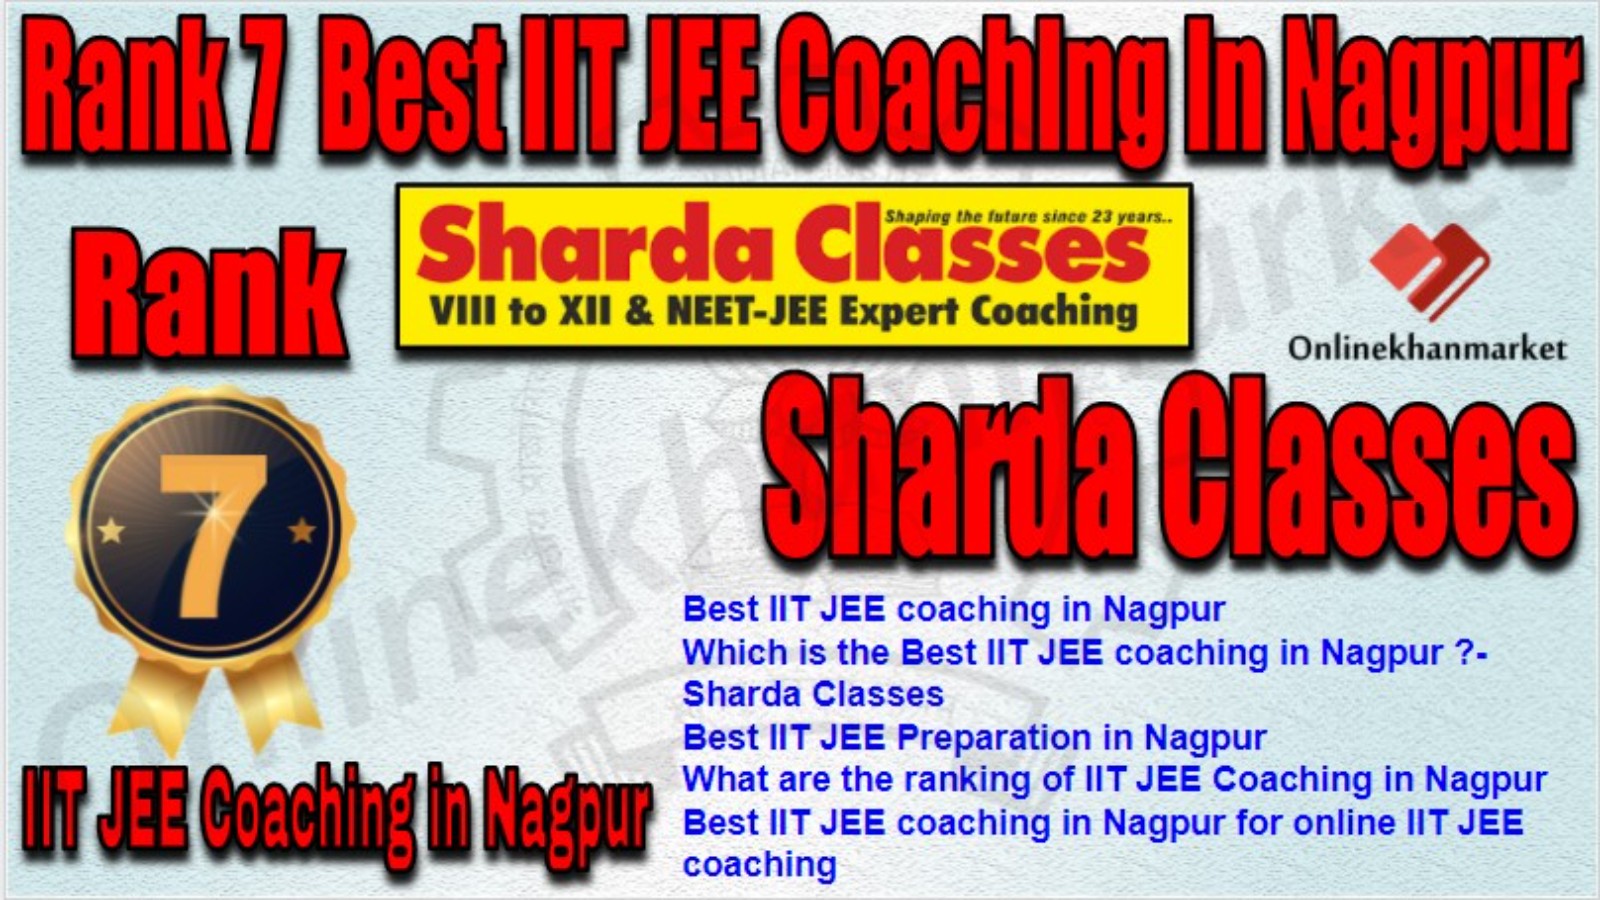 Rank 7 Best IIT JEE Coaching in nagpur 